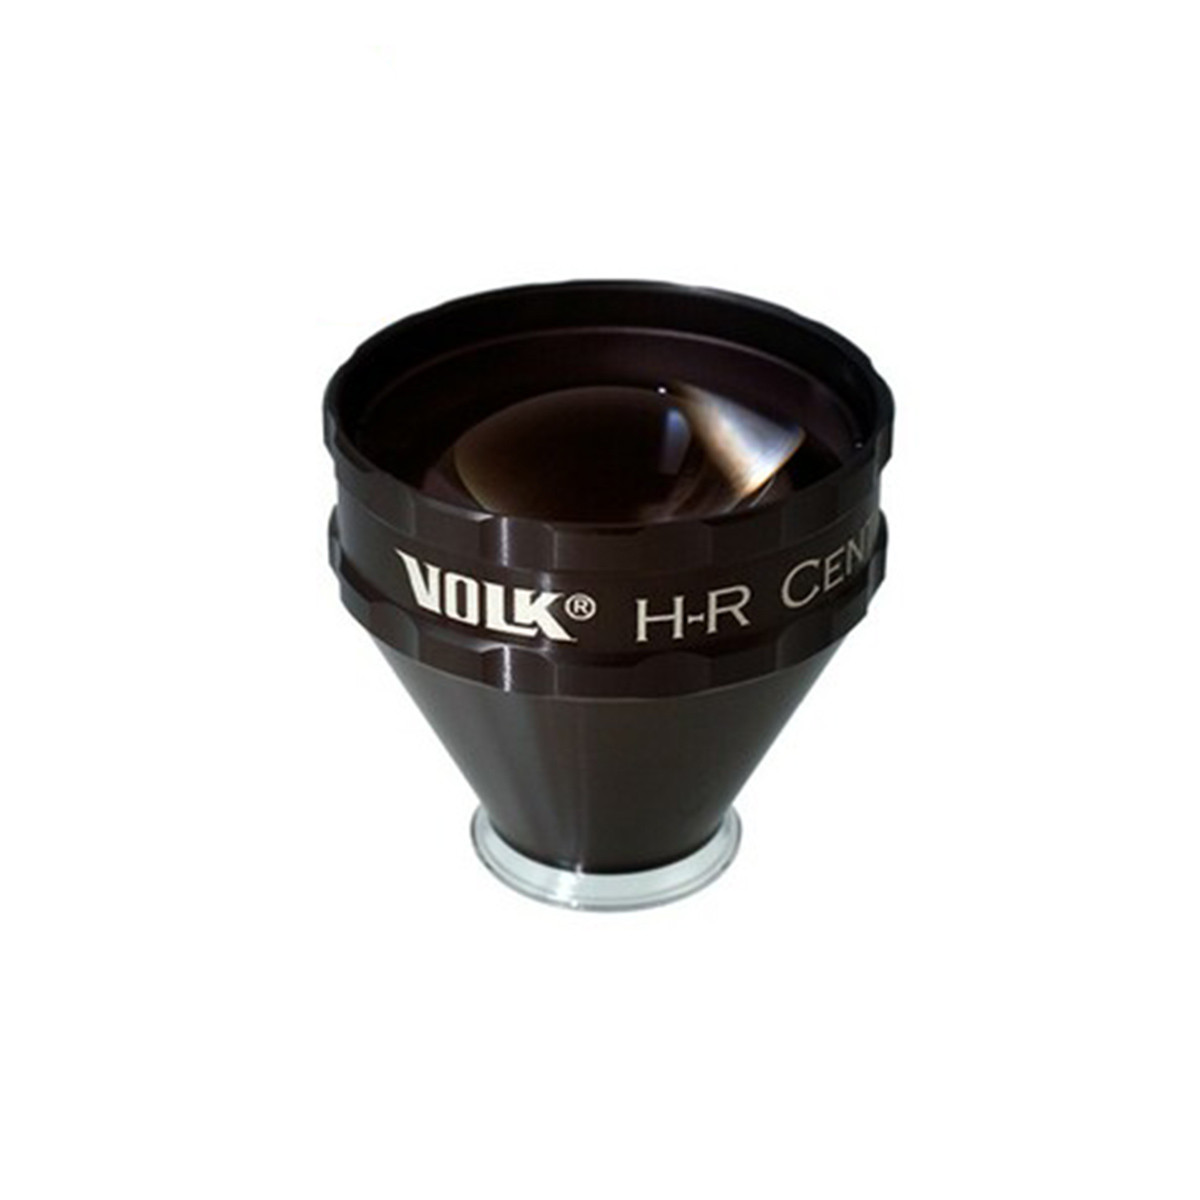 Volk High Resolution Centralis Lens